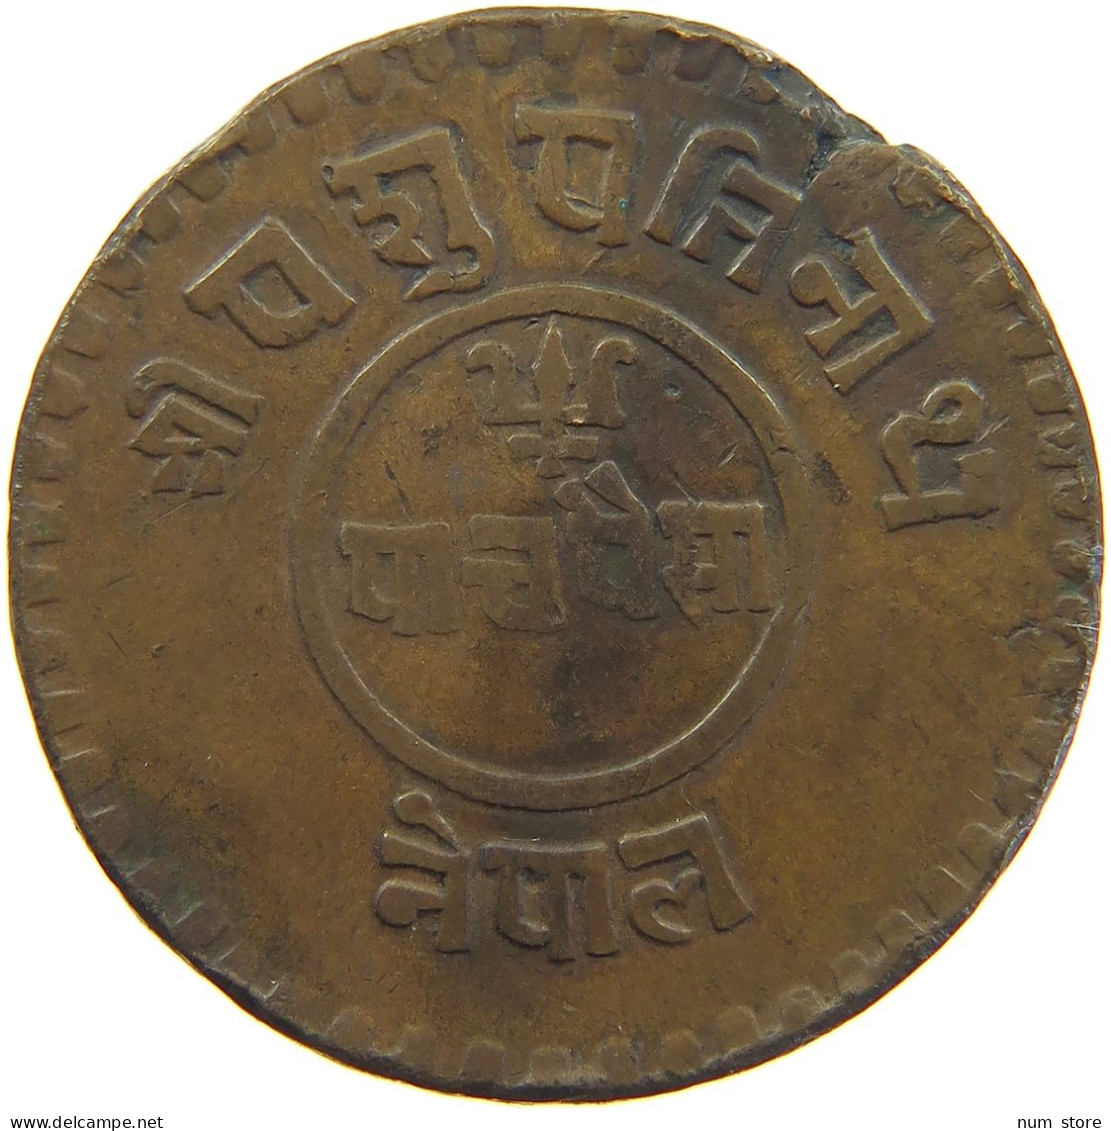 NEPAL 5 PAISA 1977  #c041 0211 - Nepal